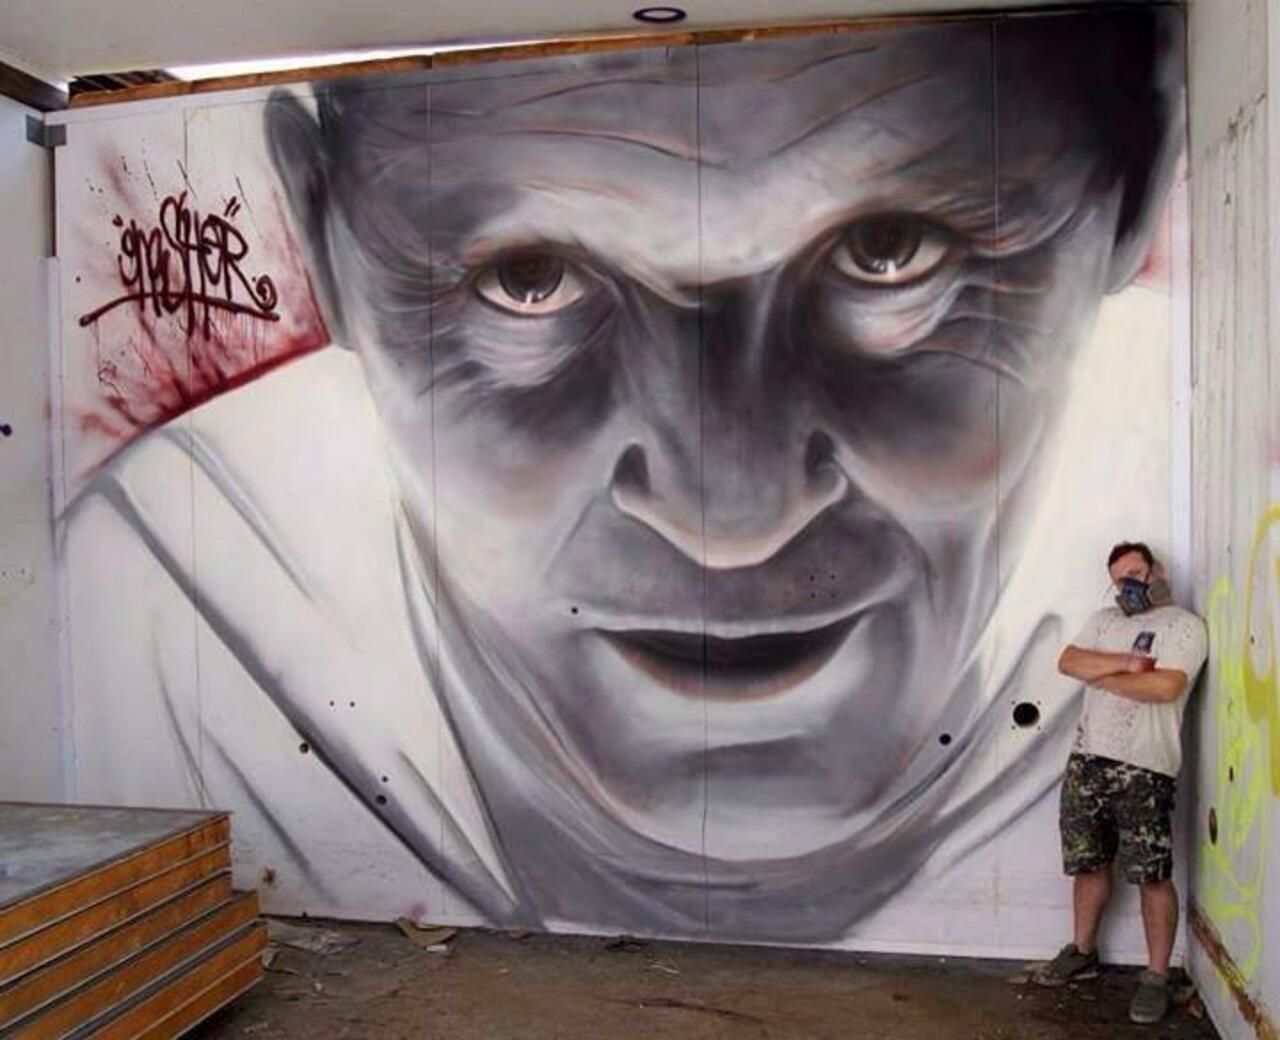 RT @designopinion: Artist @GnasherMurals new awesome Street Art portrait of Hannibal Lector #art #graffiti #mural #streetart https://t.co/lZuxdkKS4h